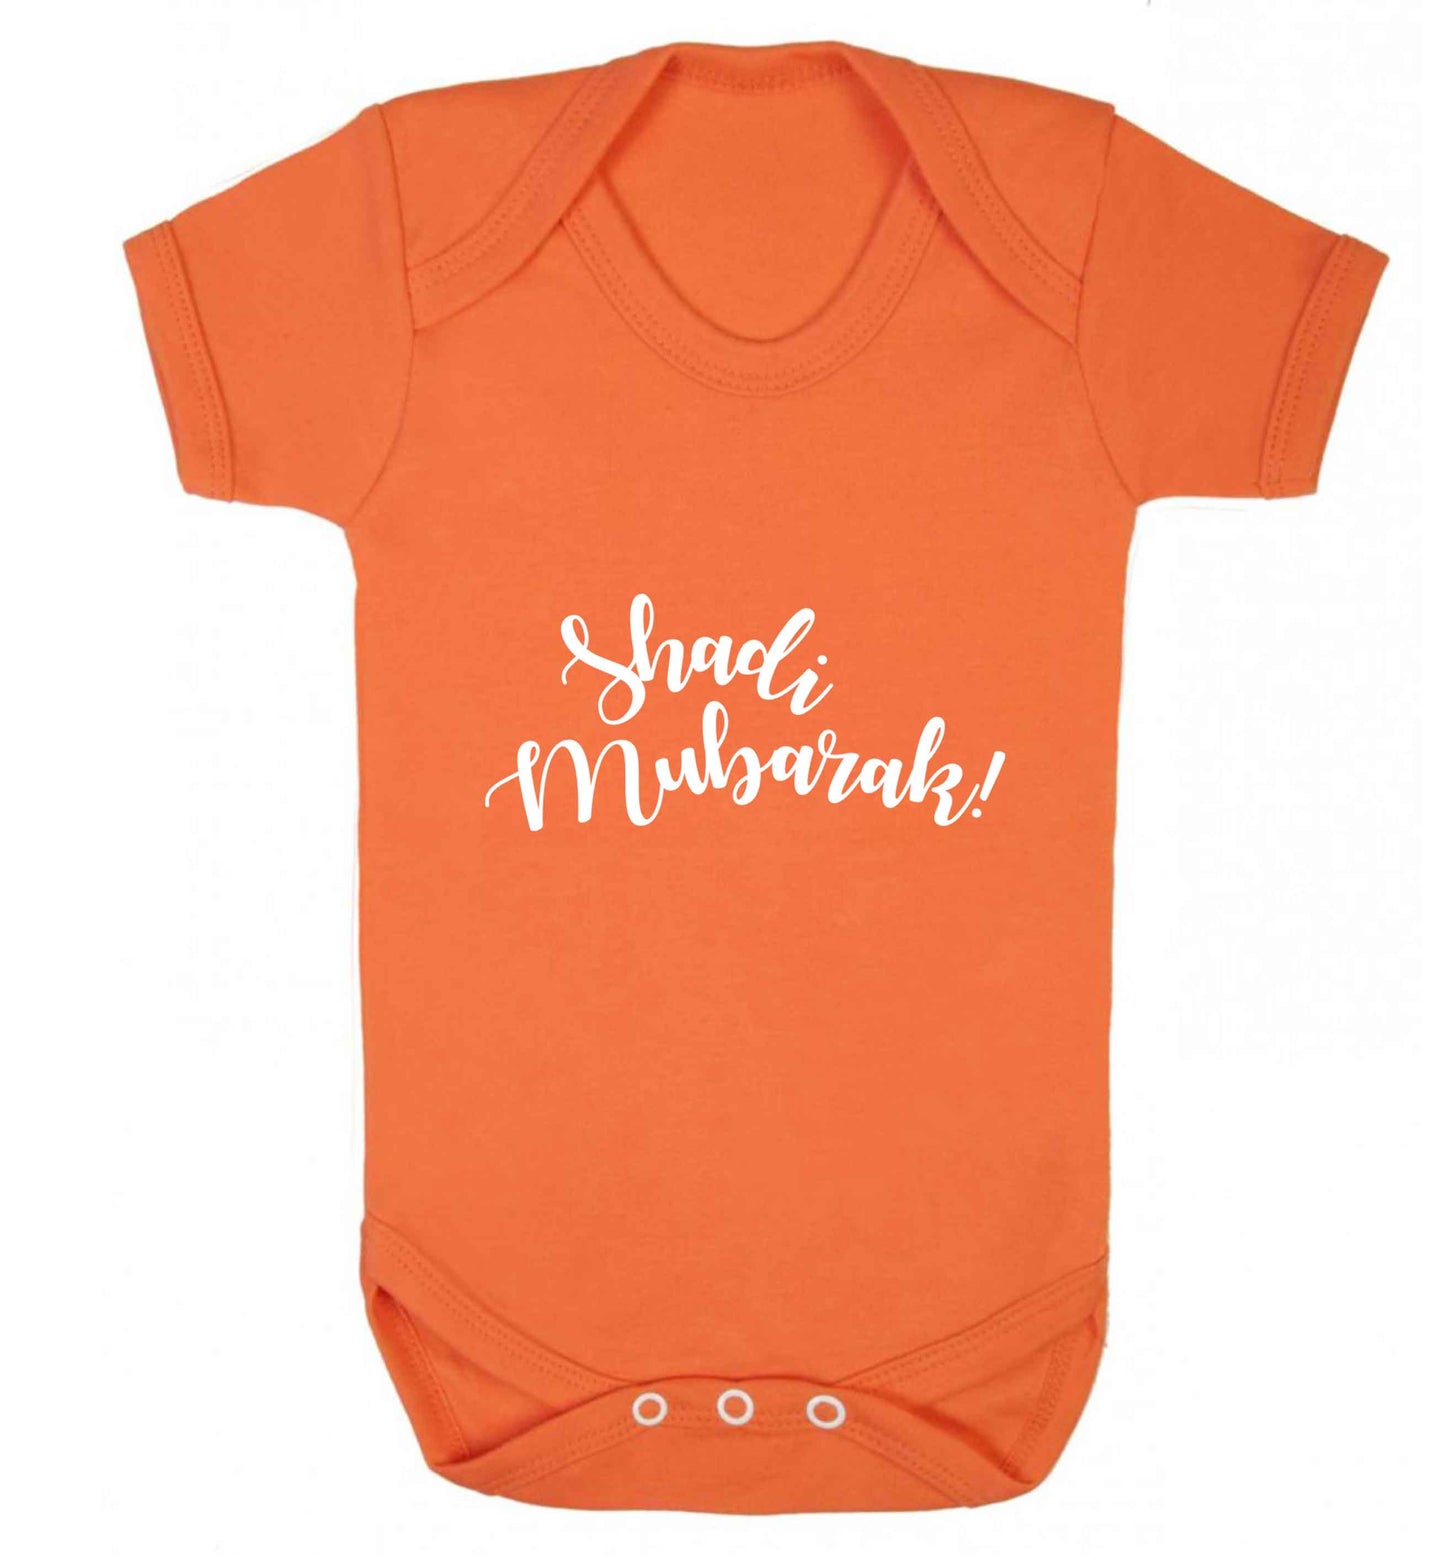 Shadi mubarak baby vest orange 18-24 months